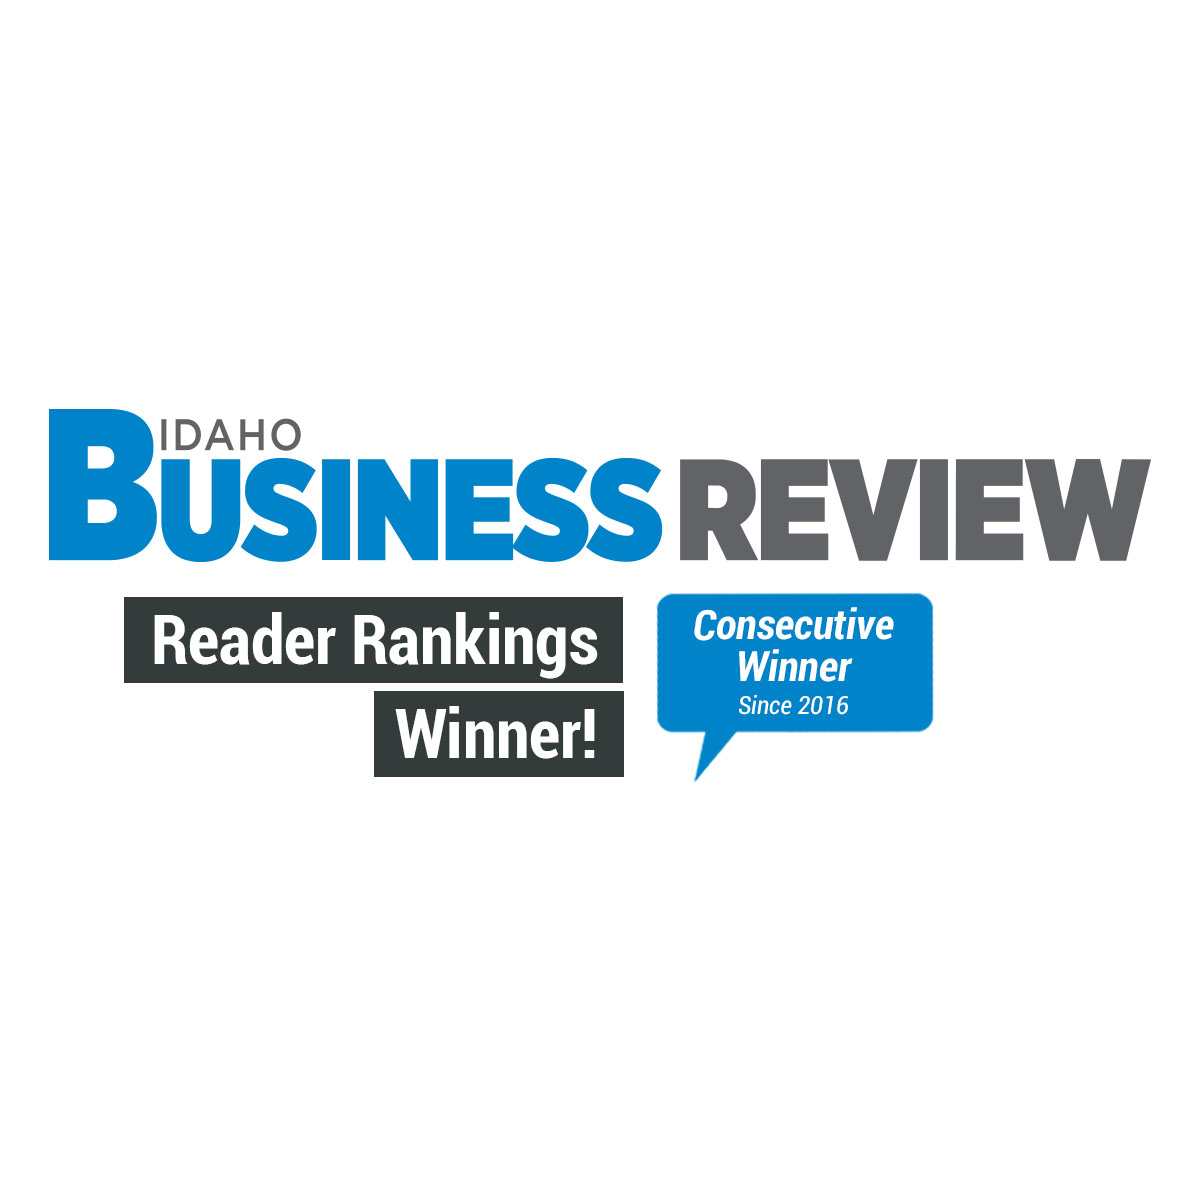 Idaho Business Review Reader Rankings Winner